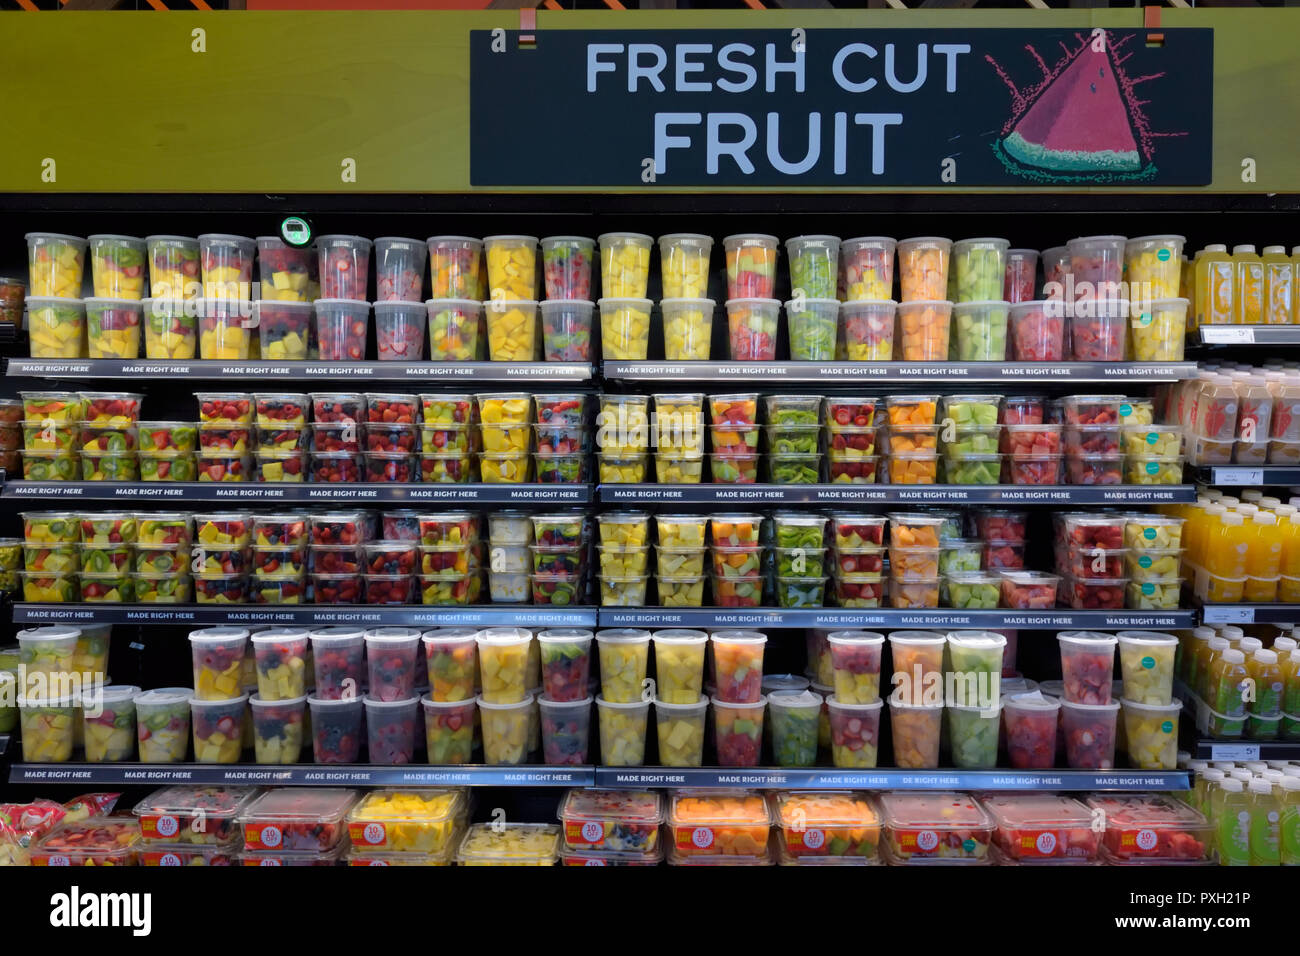 https://c8.alamy.com/comp/PXH21P/fresh-cut-fruit-at-whole-foods-PXH21P.jpg